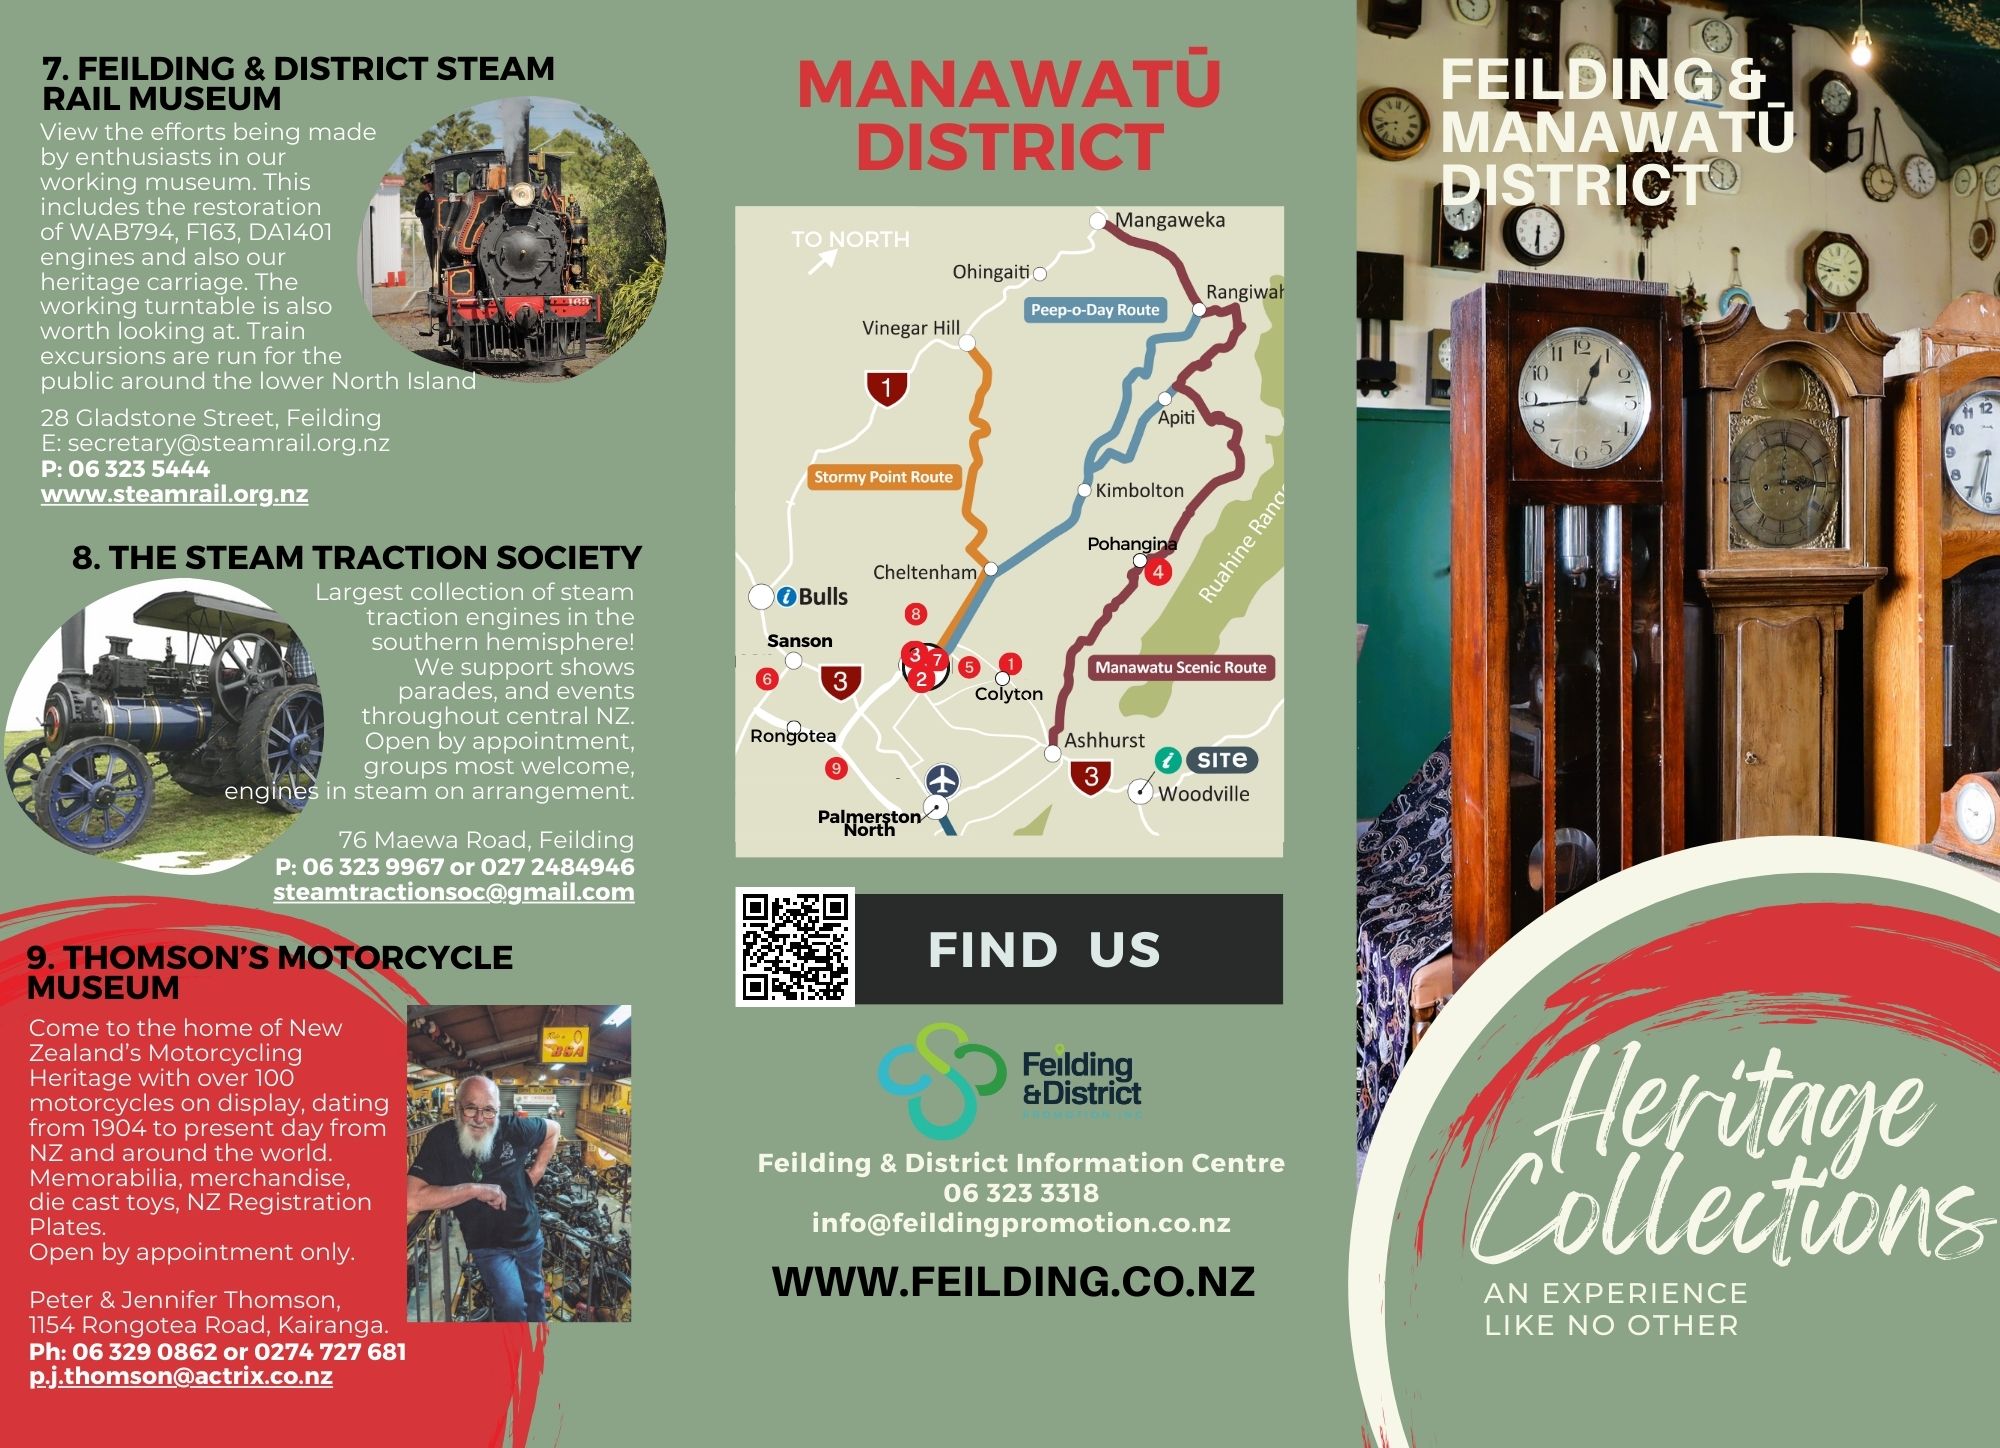 Manawatu Feilding Heritage Collection